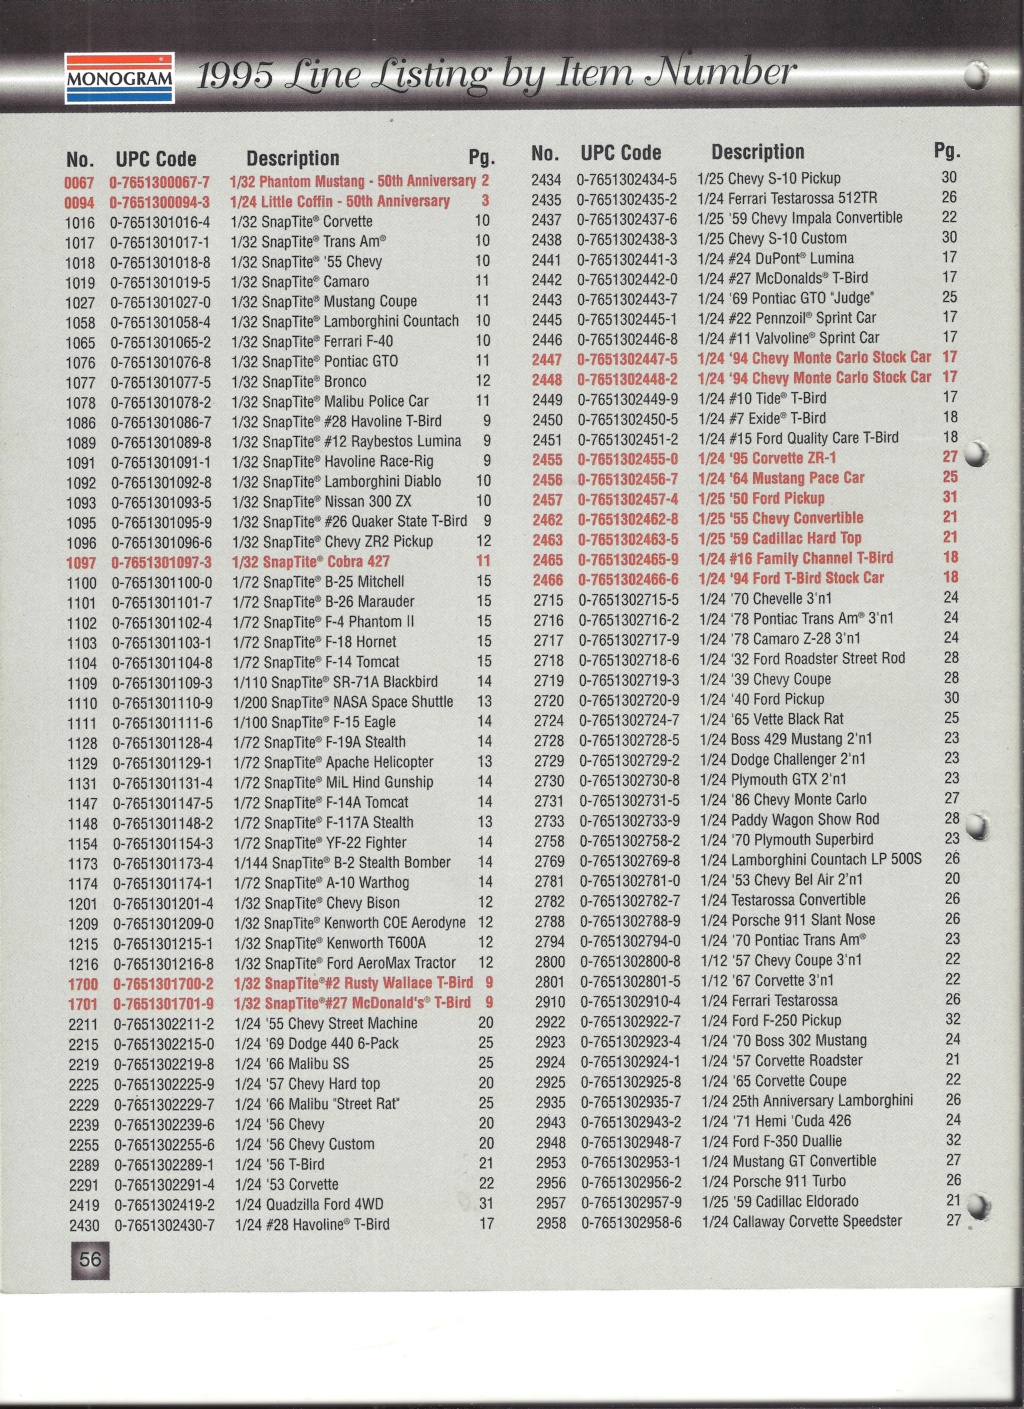 [REVELL US 1995] Catalogue 1995 Revel123